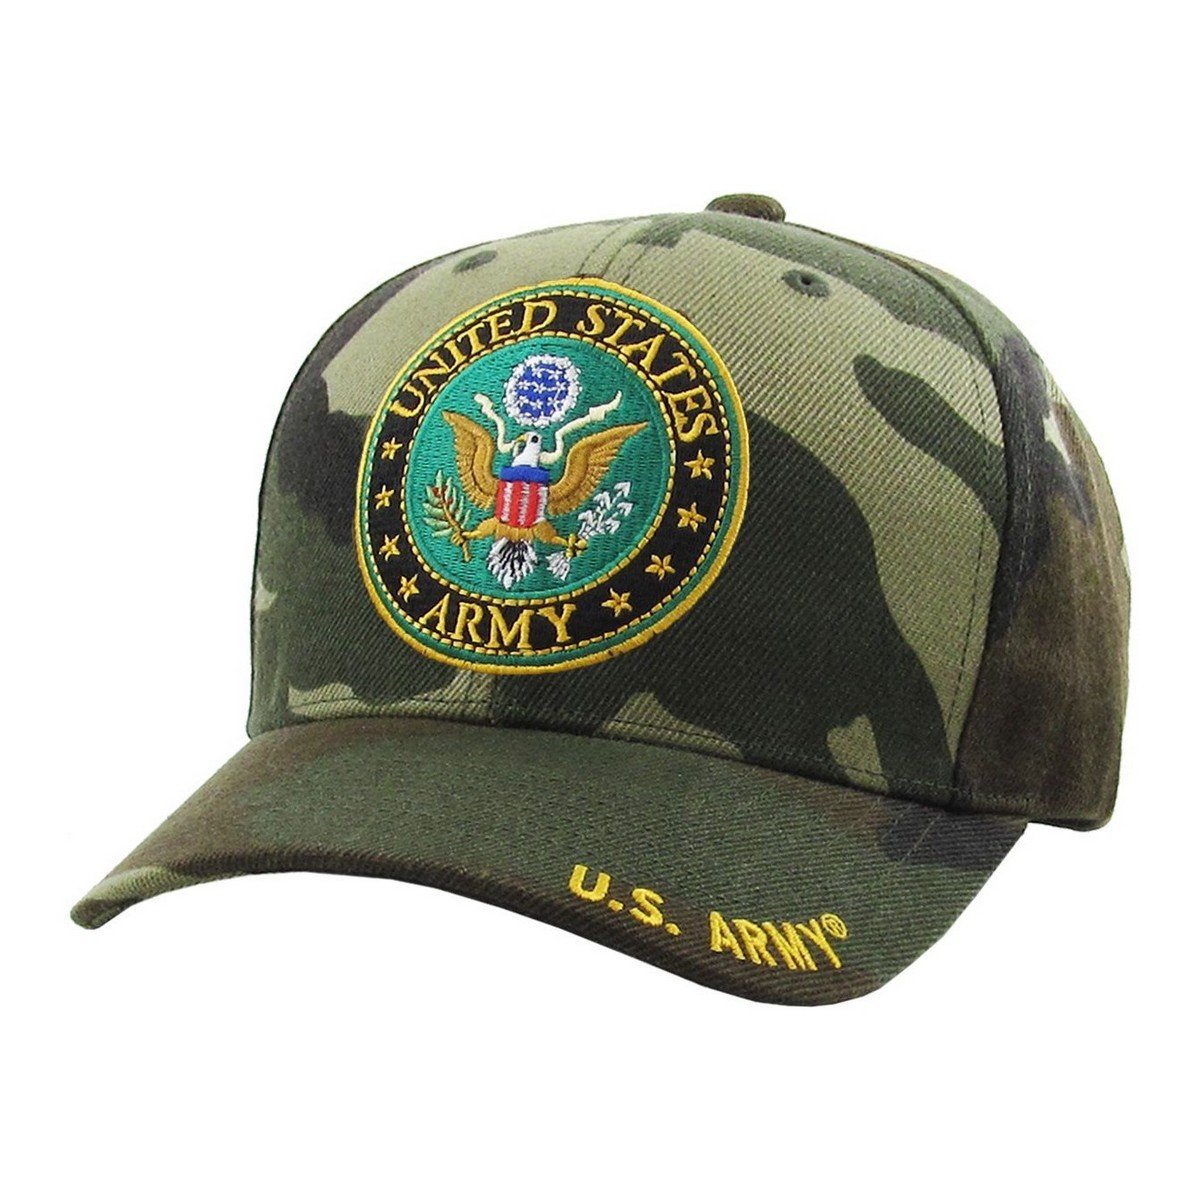 US ARMY SEAL Baseball Cap - Grøn Camo - Hat fra Ethos hos The Prince Webshop